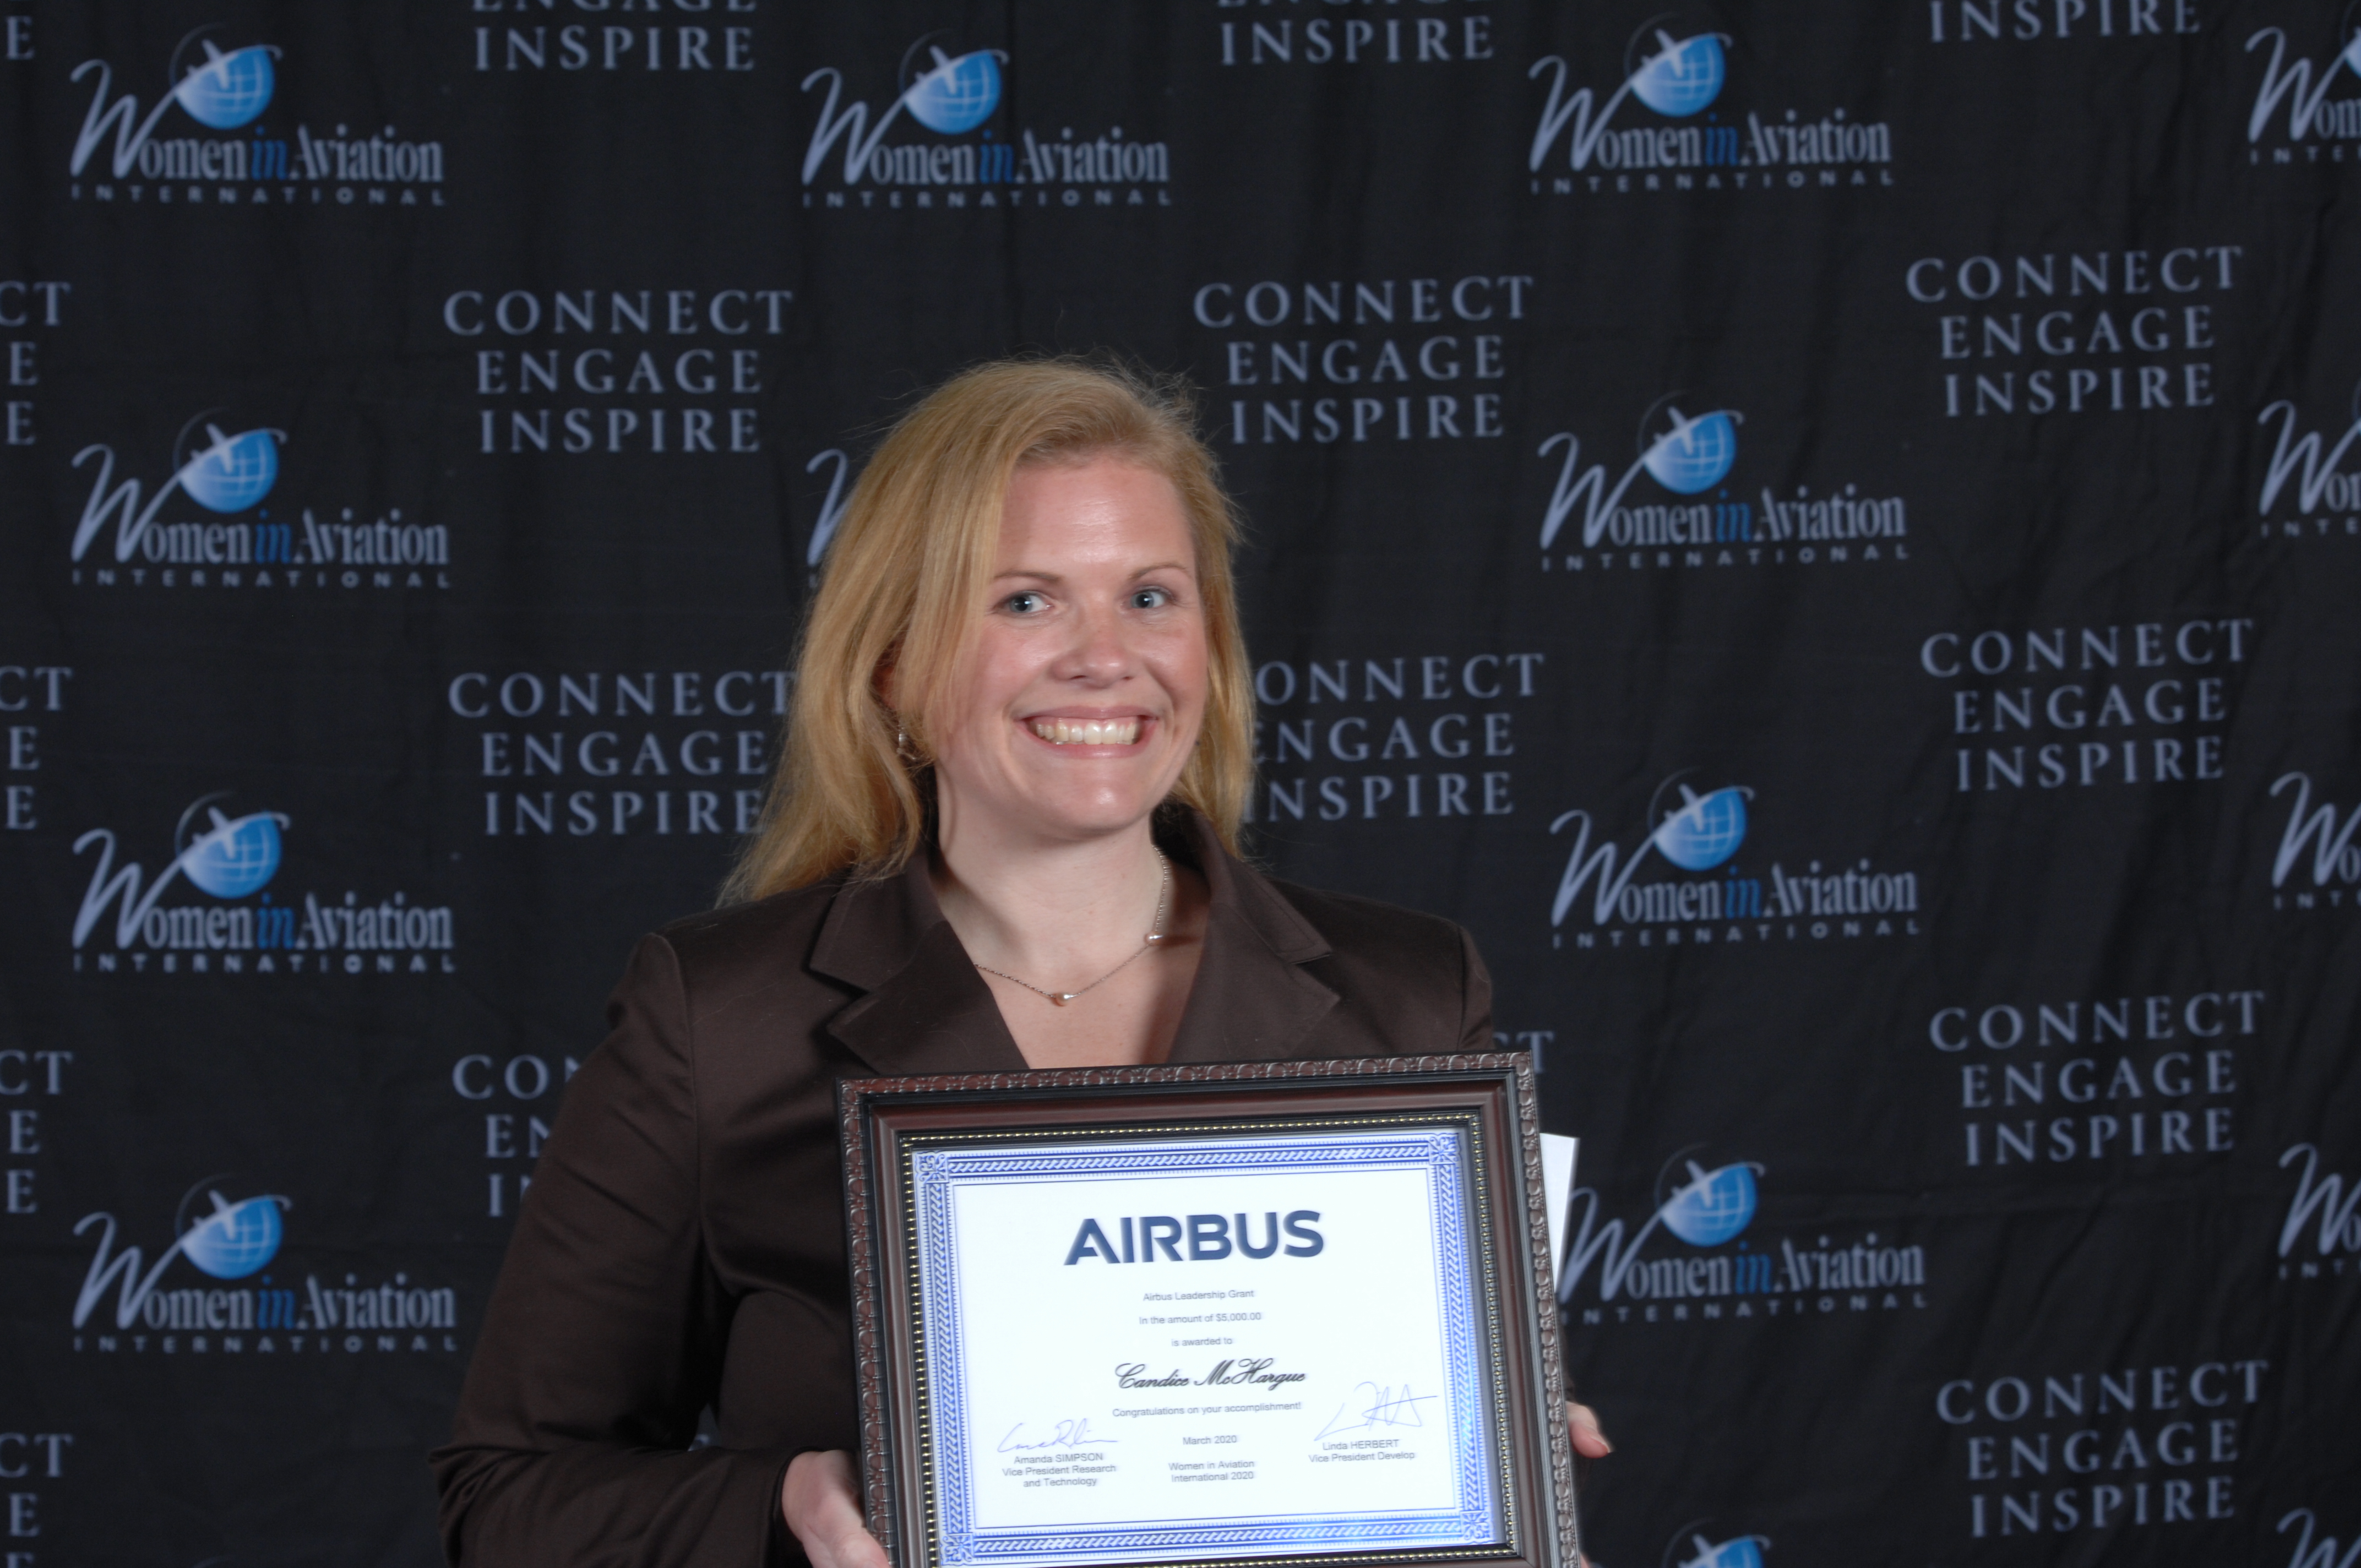 Airbus Leadership Grant, Candice McHargue